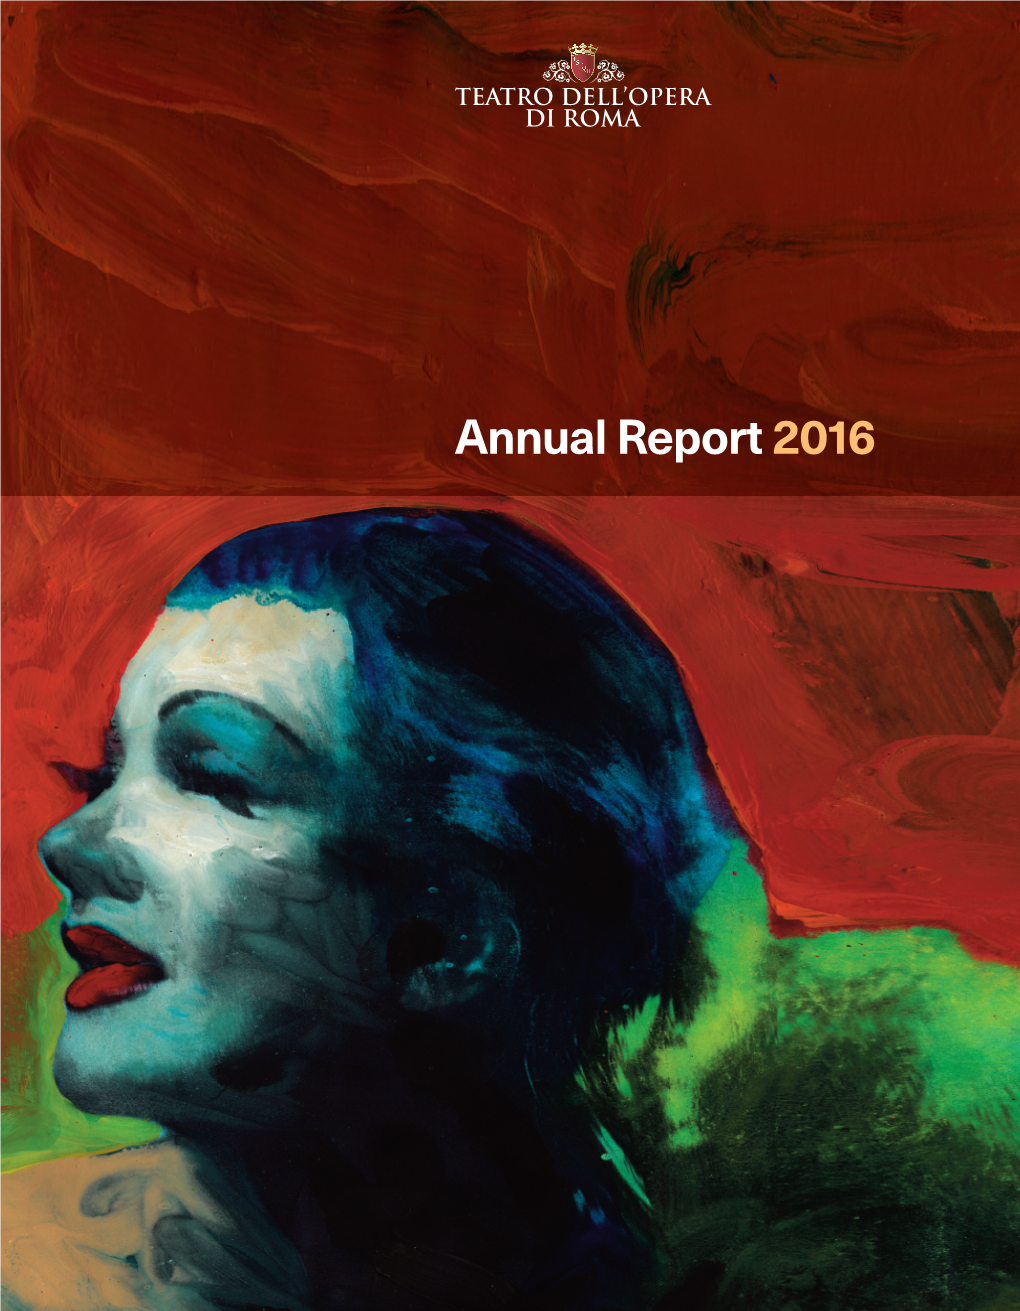 Annual Report 2016 ~  RICCARDO MUTI Direttore Onorario a Vita